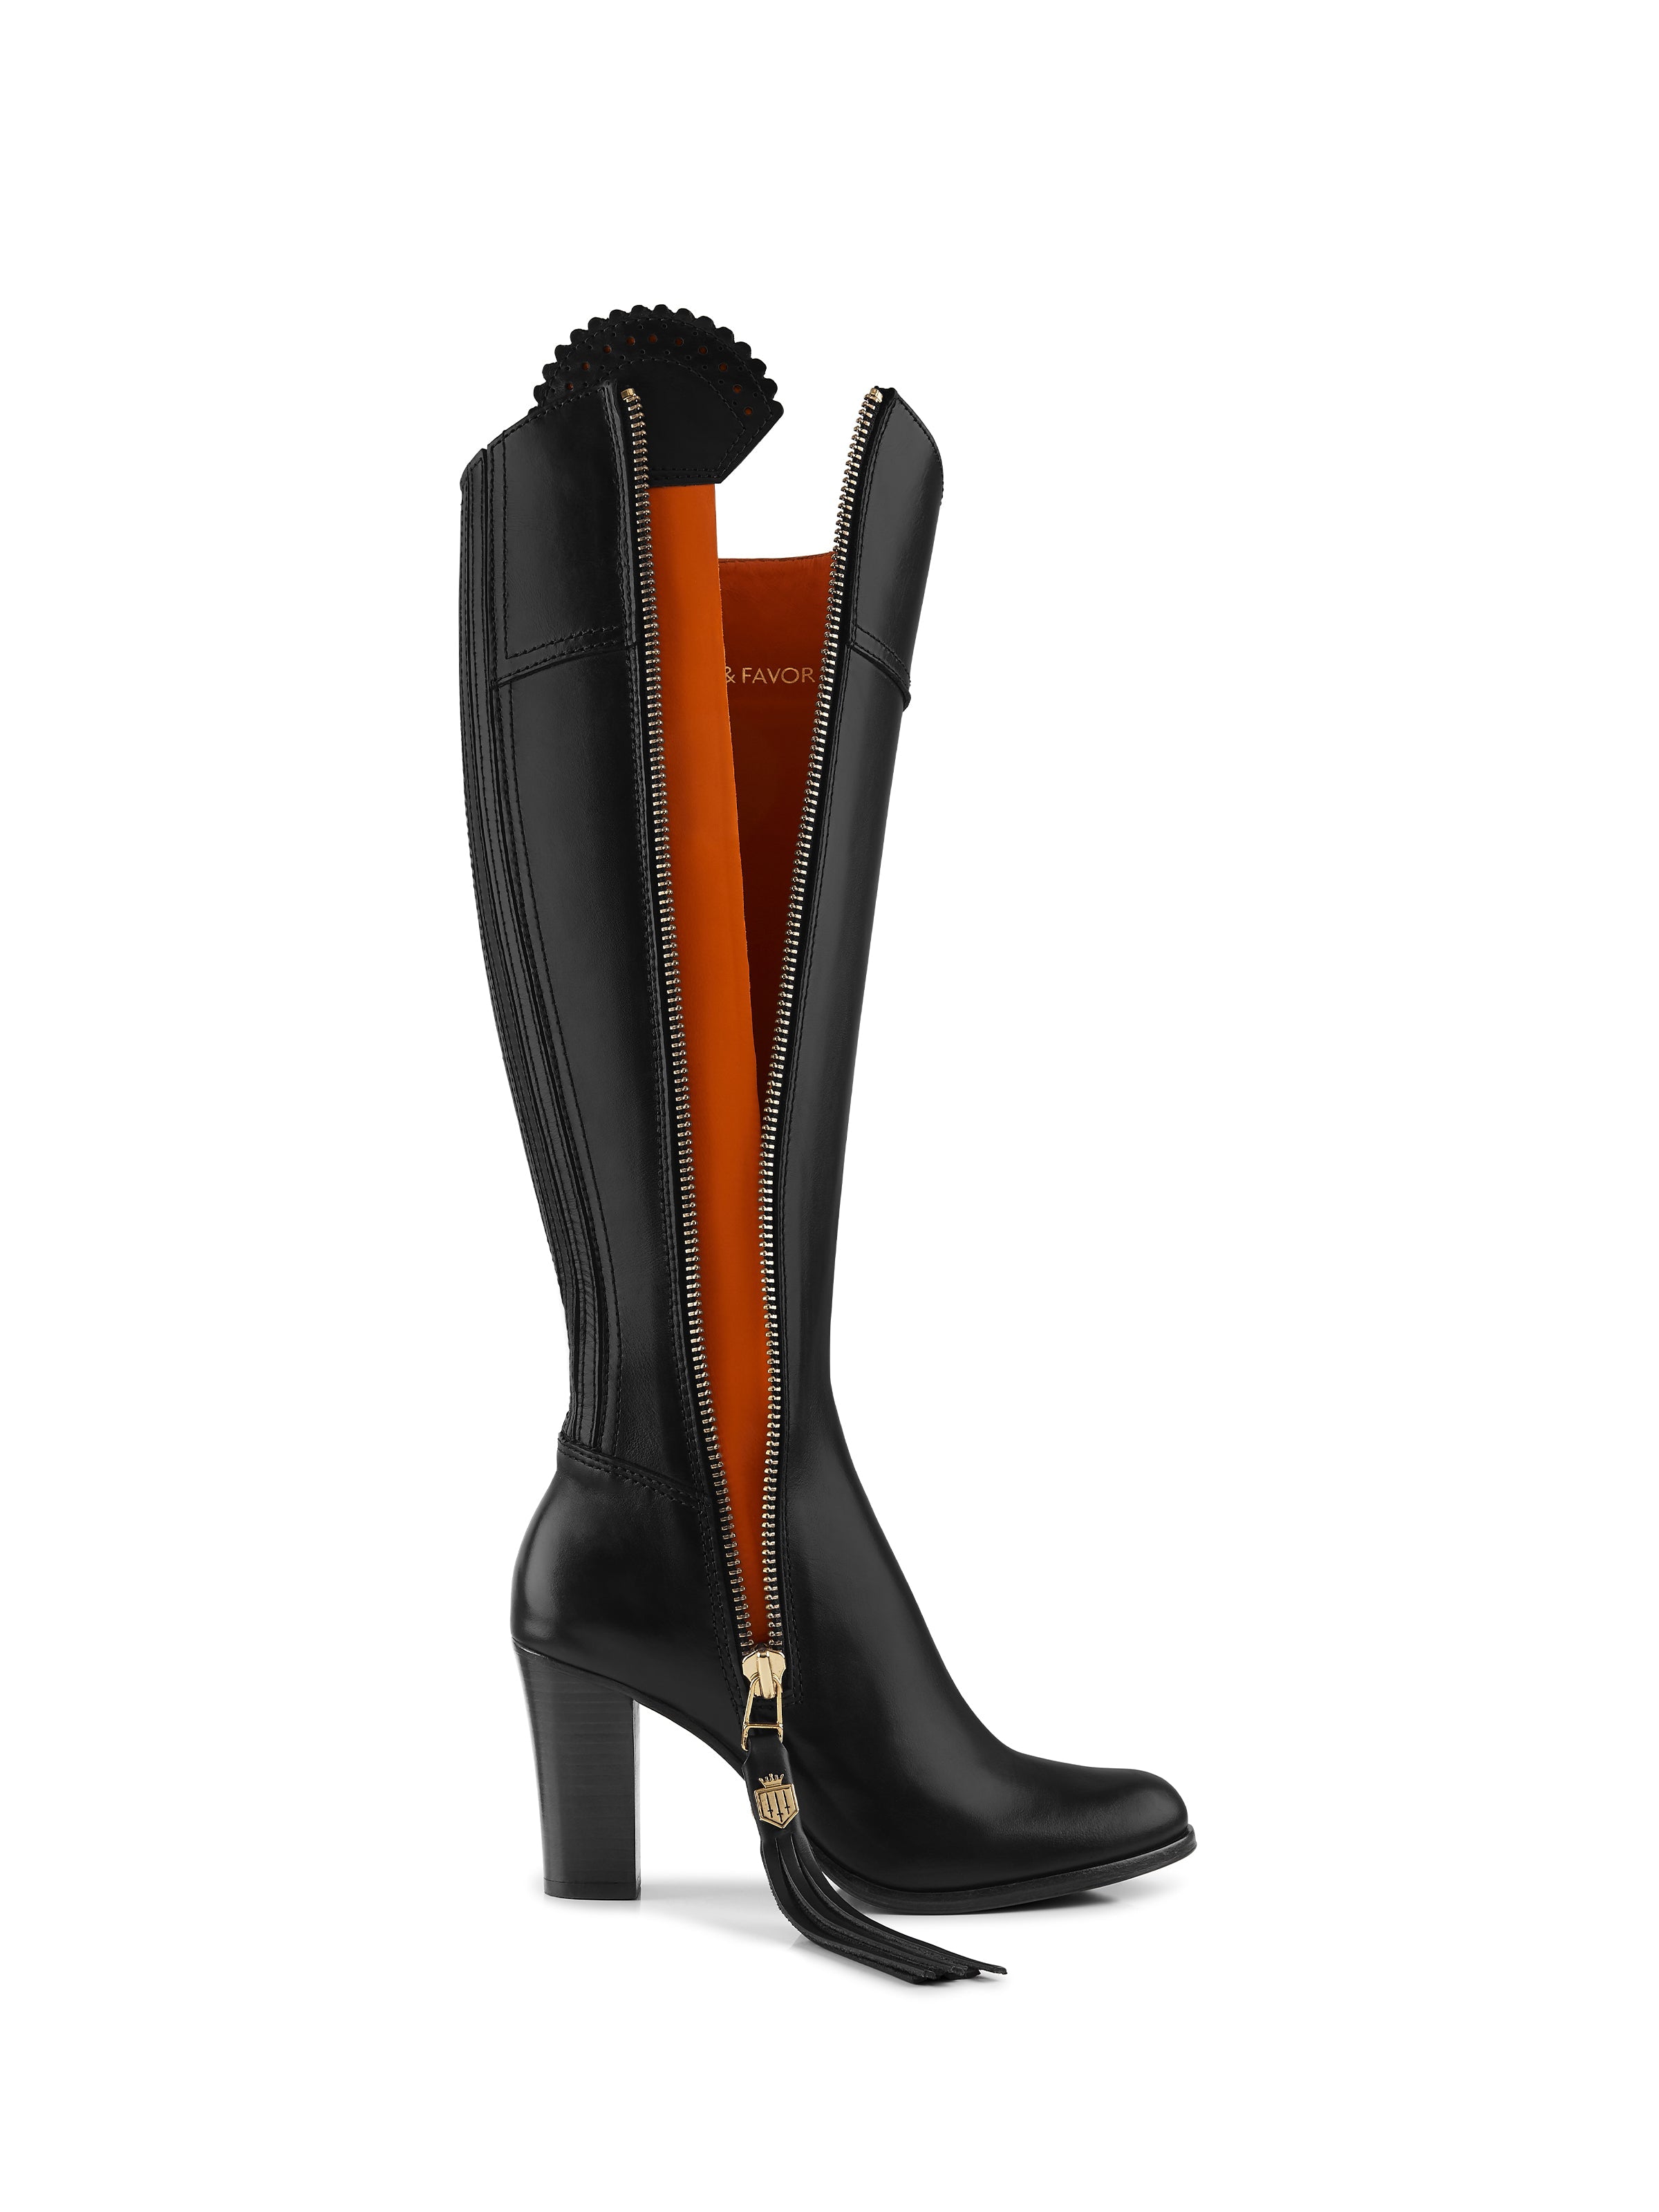 The High Heeled Regina Boot - Black Leather